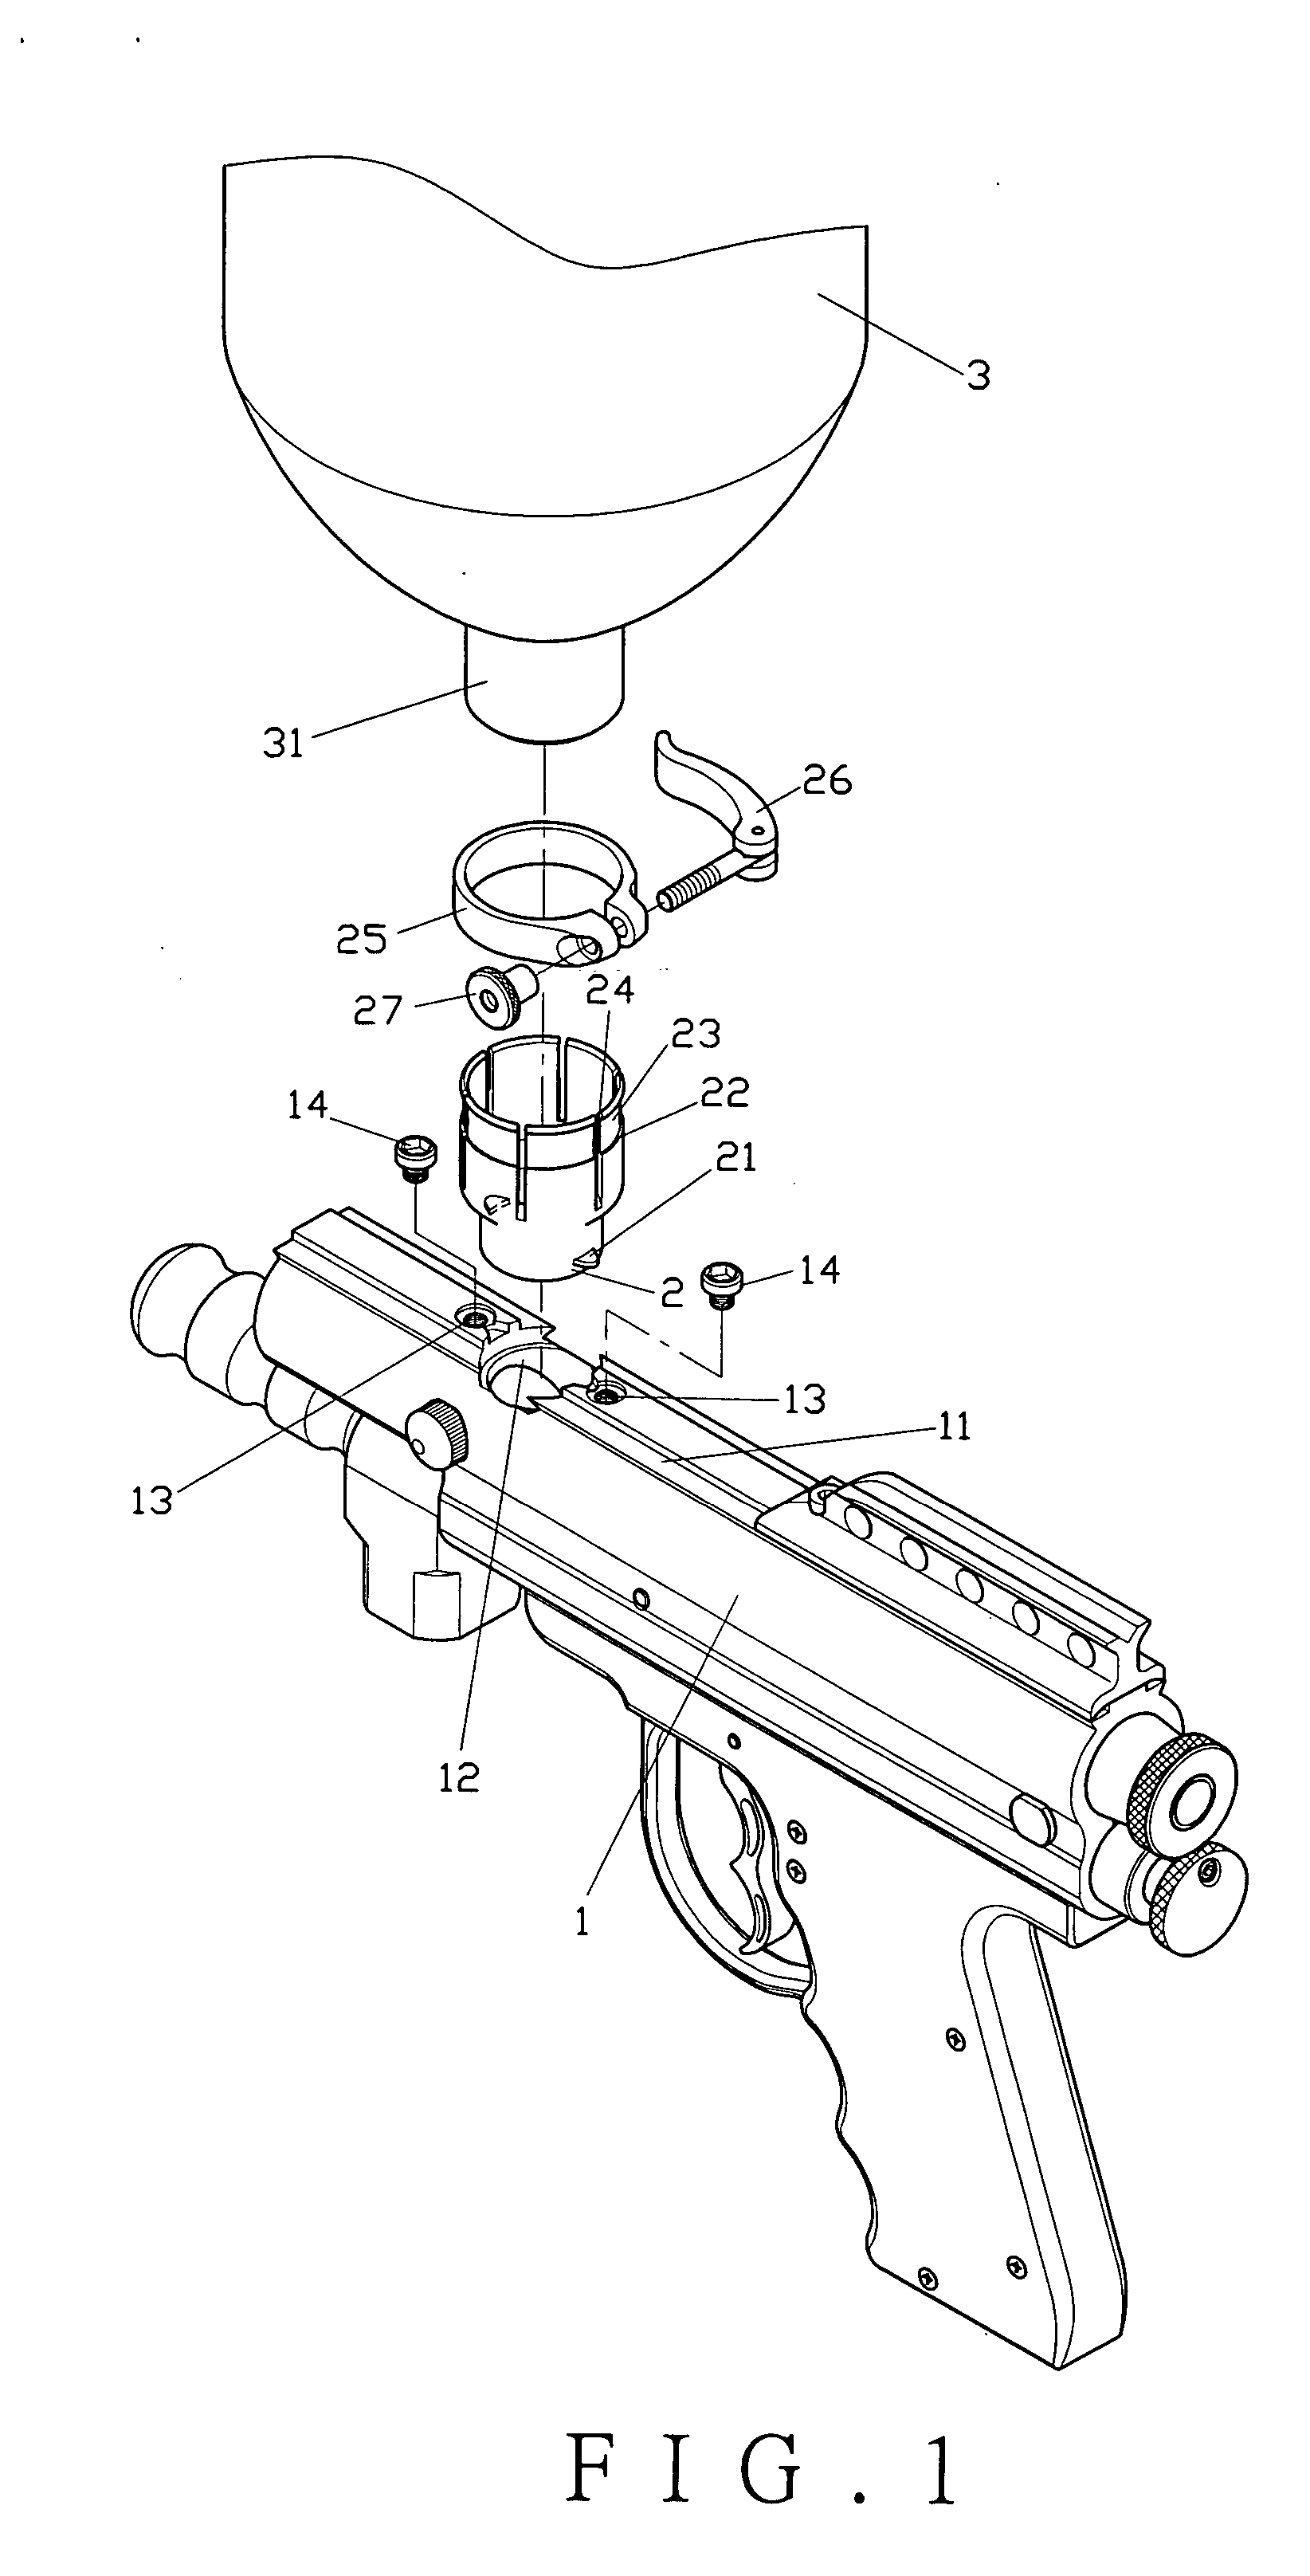 Paintball gun loading device